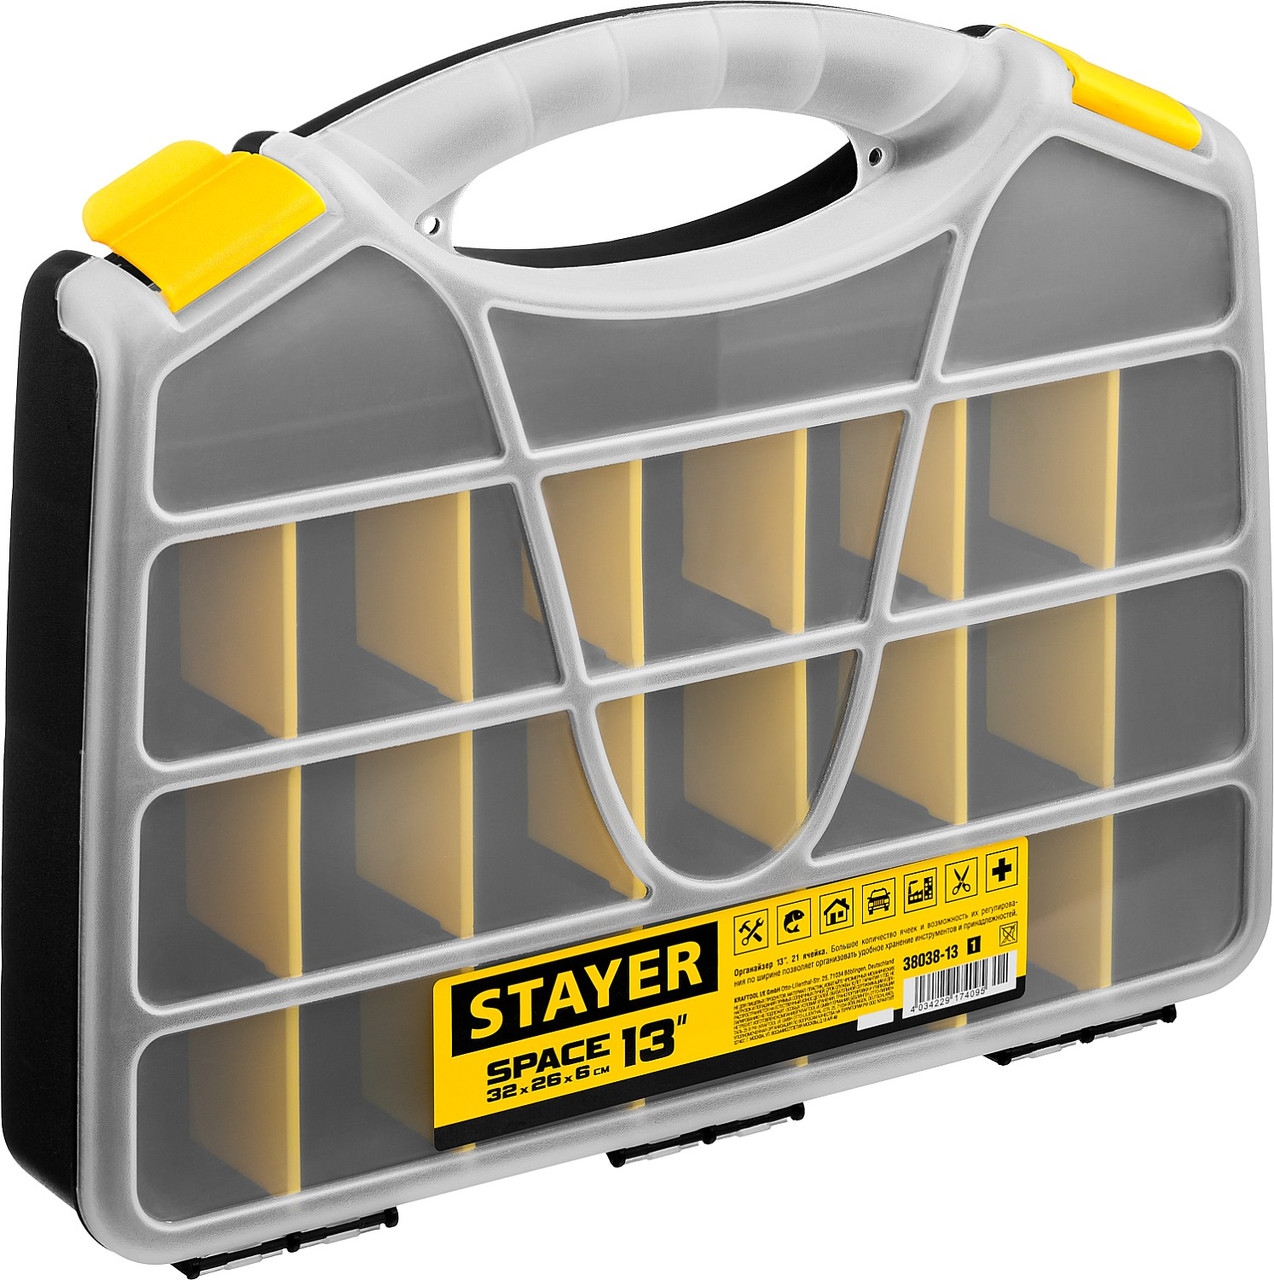 STAYER SPACE-13, 320 х 260 х 50 мм, (12.5″), Пластиковый ящик для инструментов (38038-13)